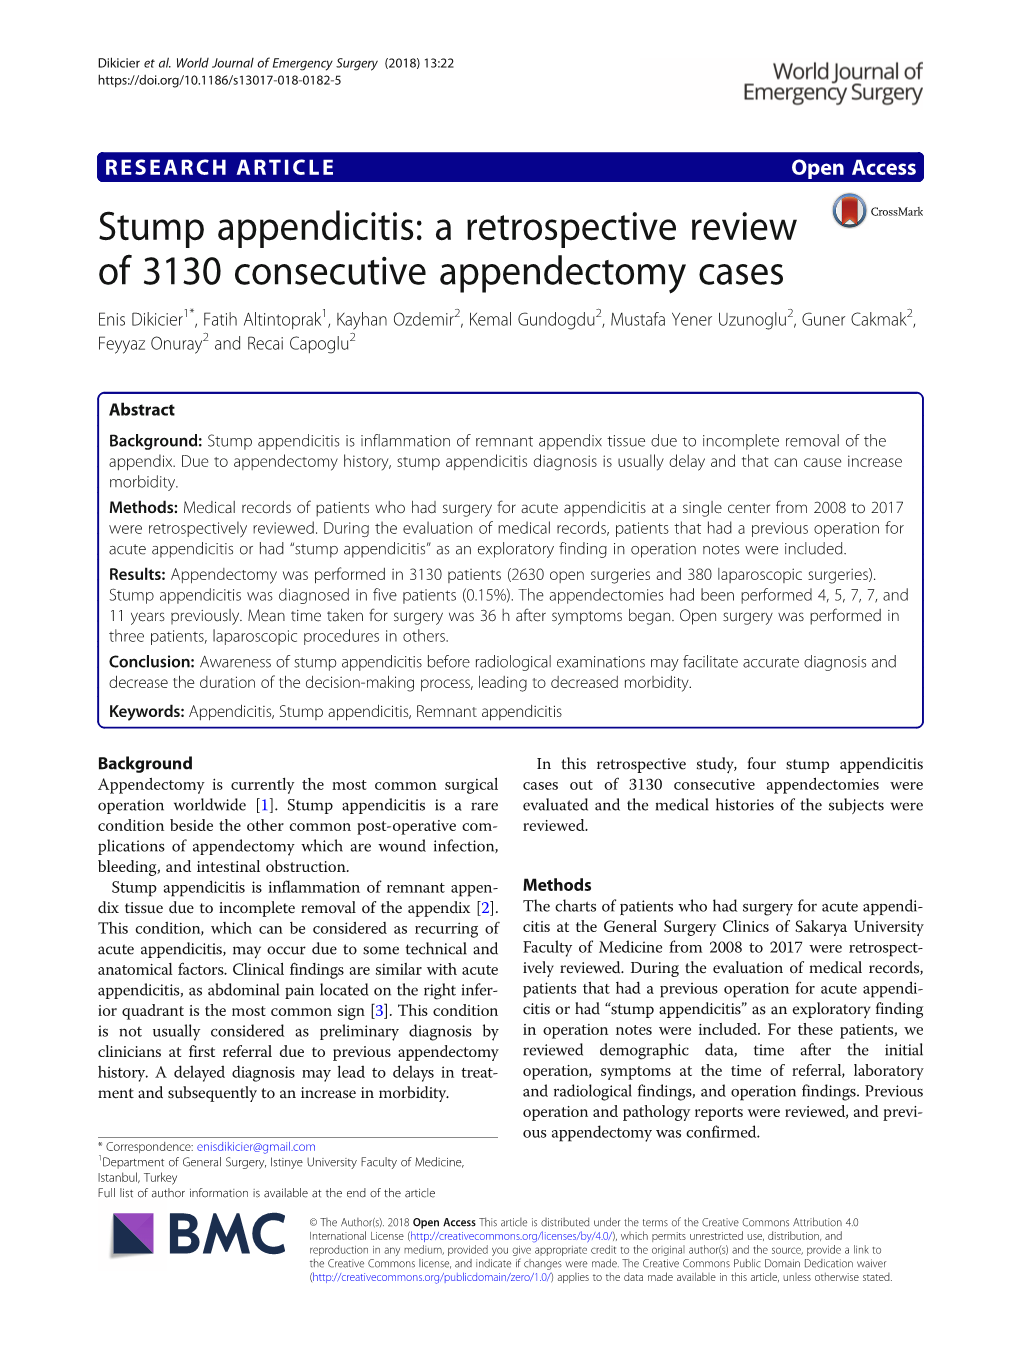 Stump Appendicitis: a Retrospective Review of 3130 Consecutive